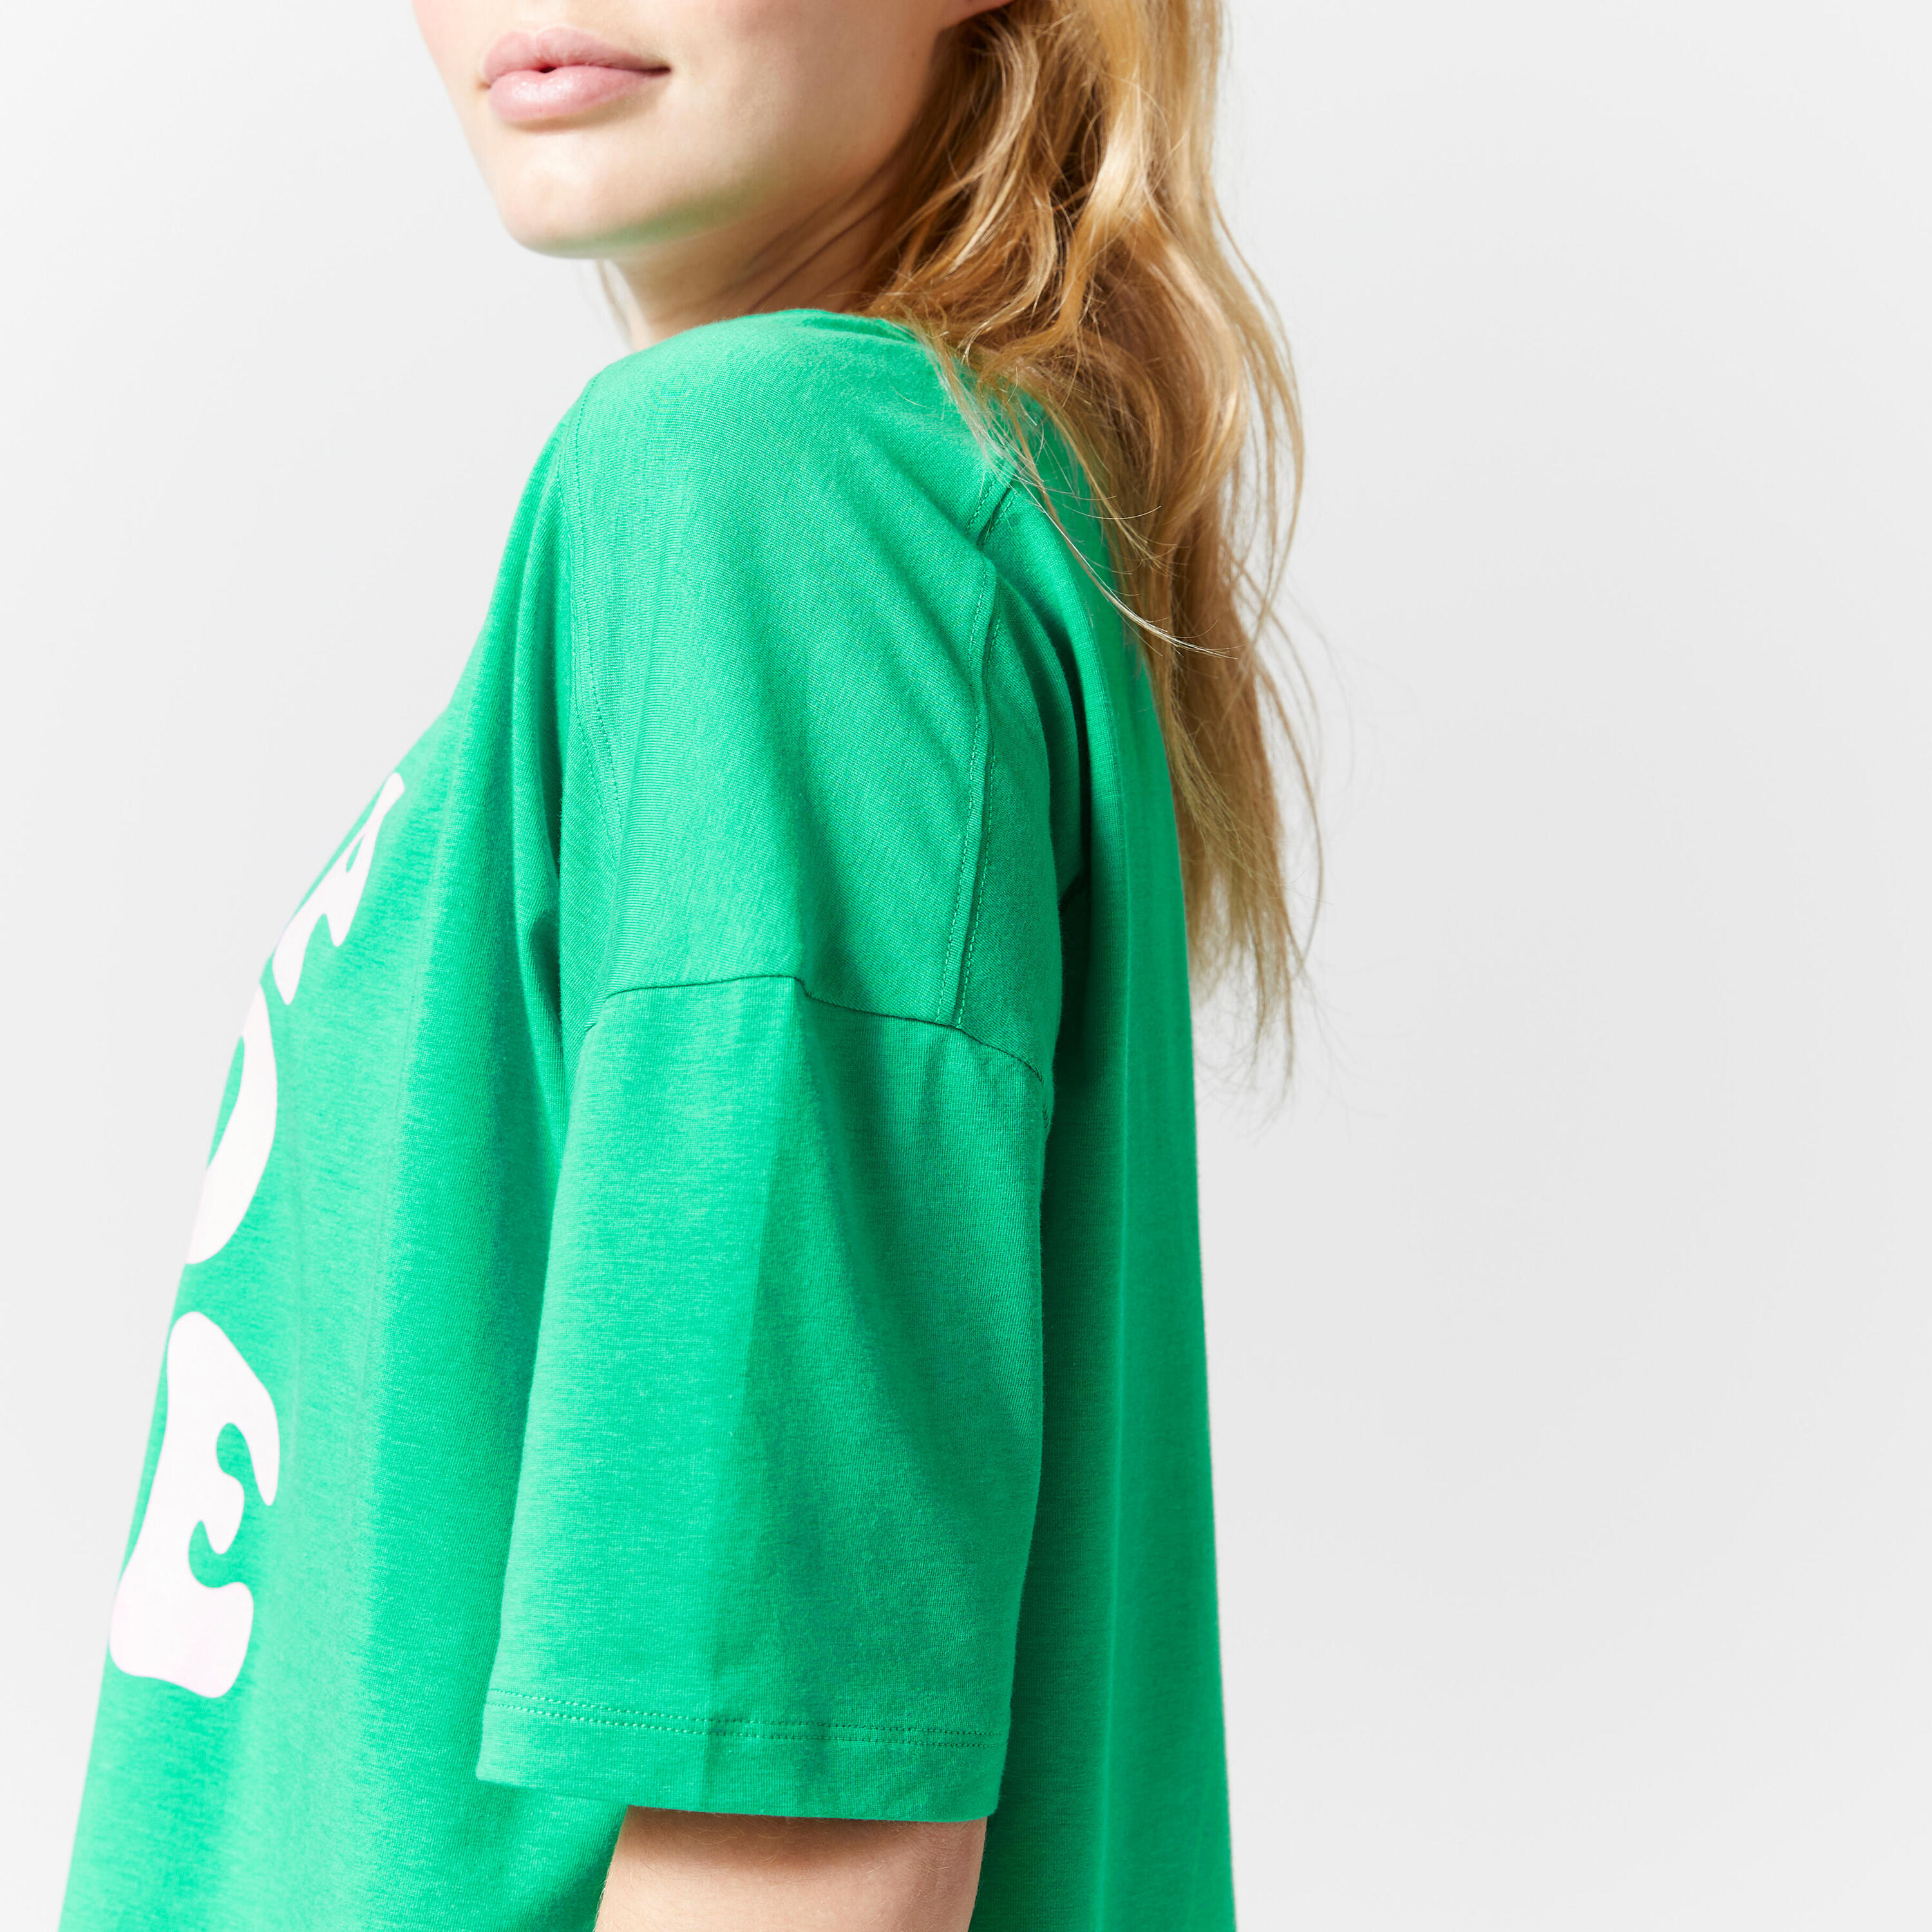 Women's Loose-Fit Fitness T-Shirt 520 - Green Print 5/5